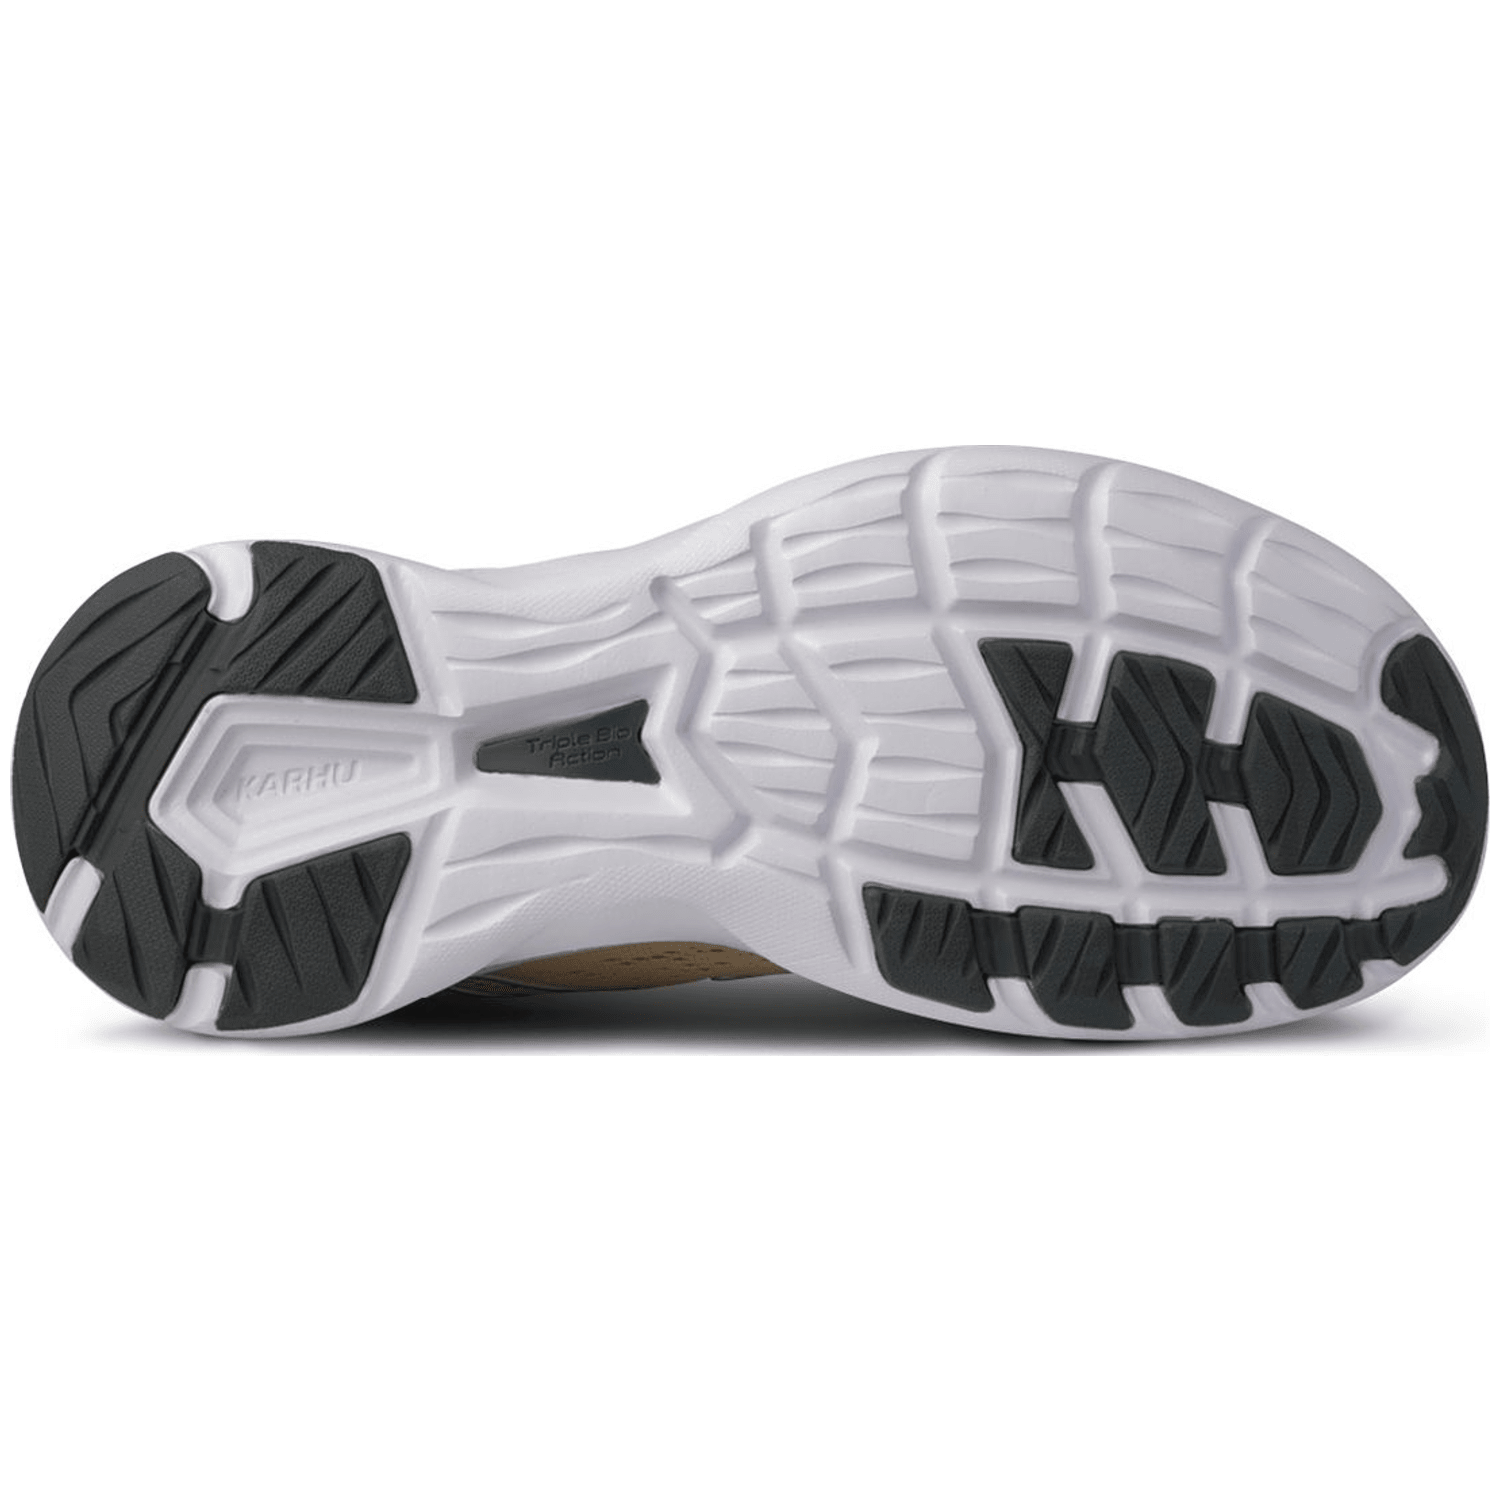 Karhu Fusion Ortix 3.5 Damen Running-Schuh